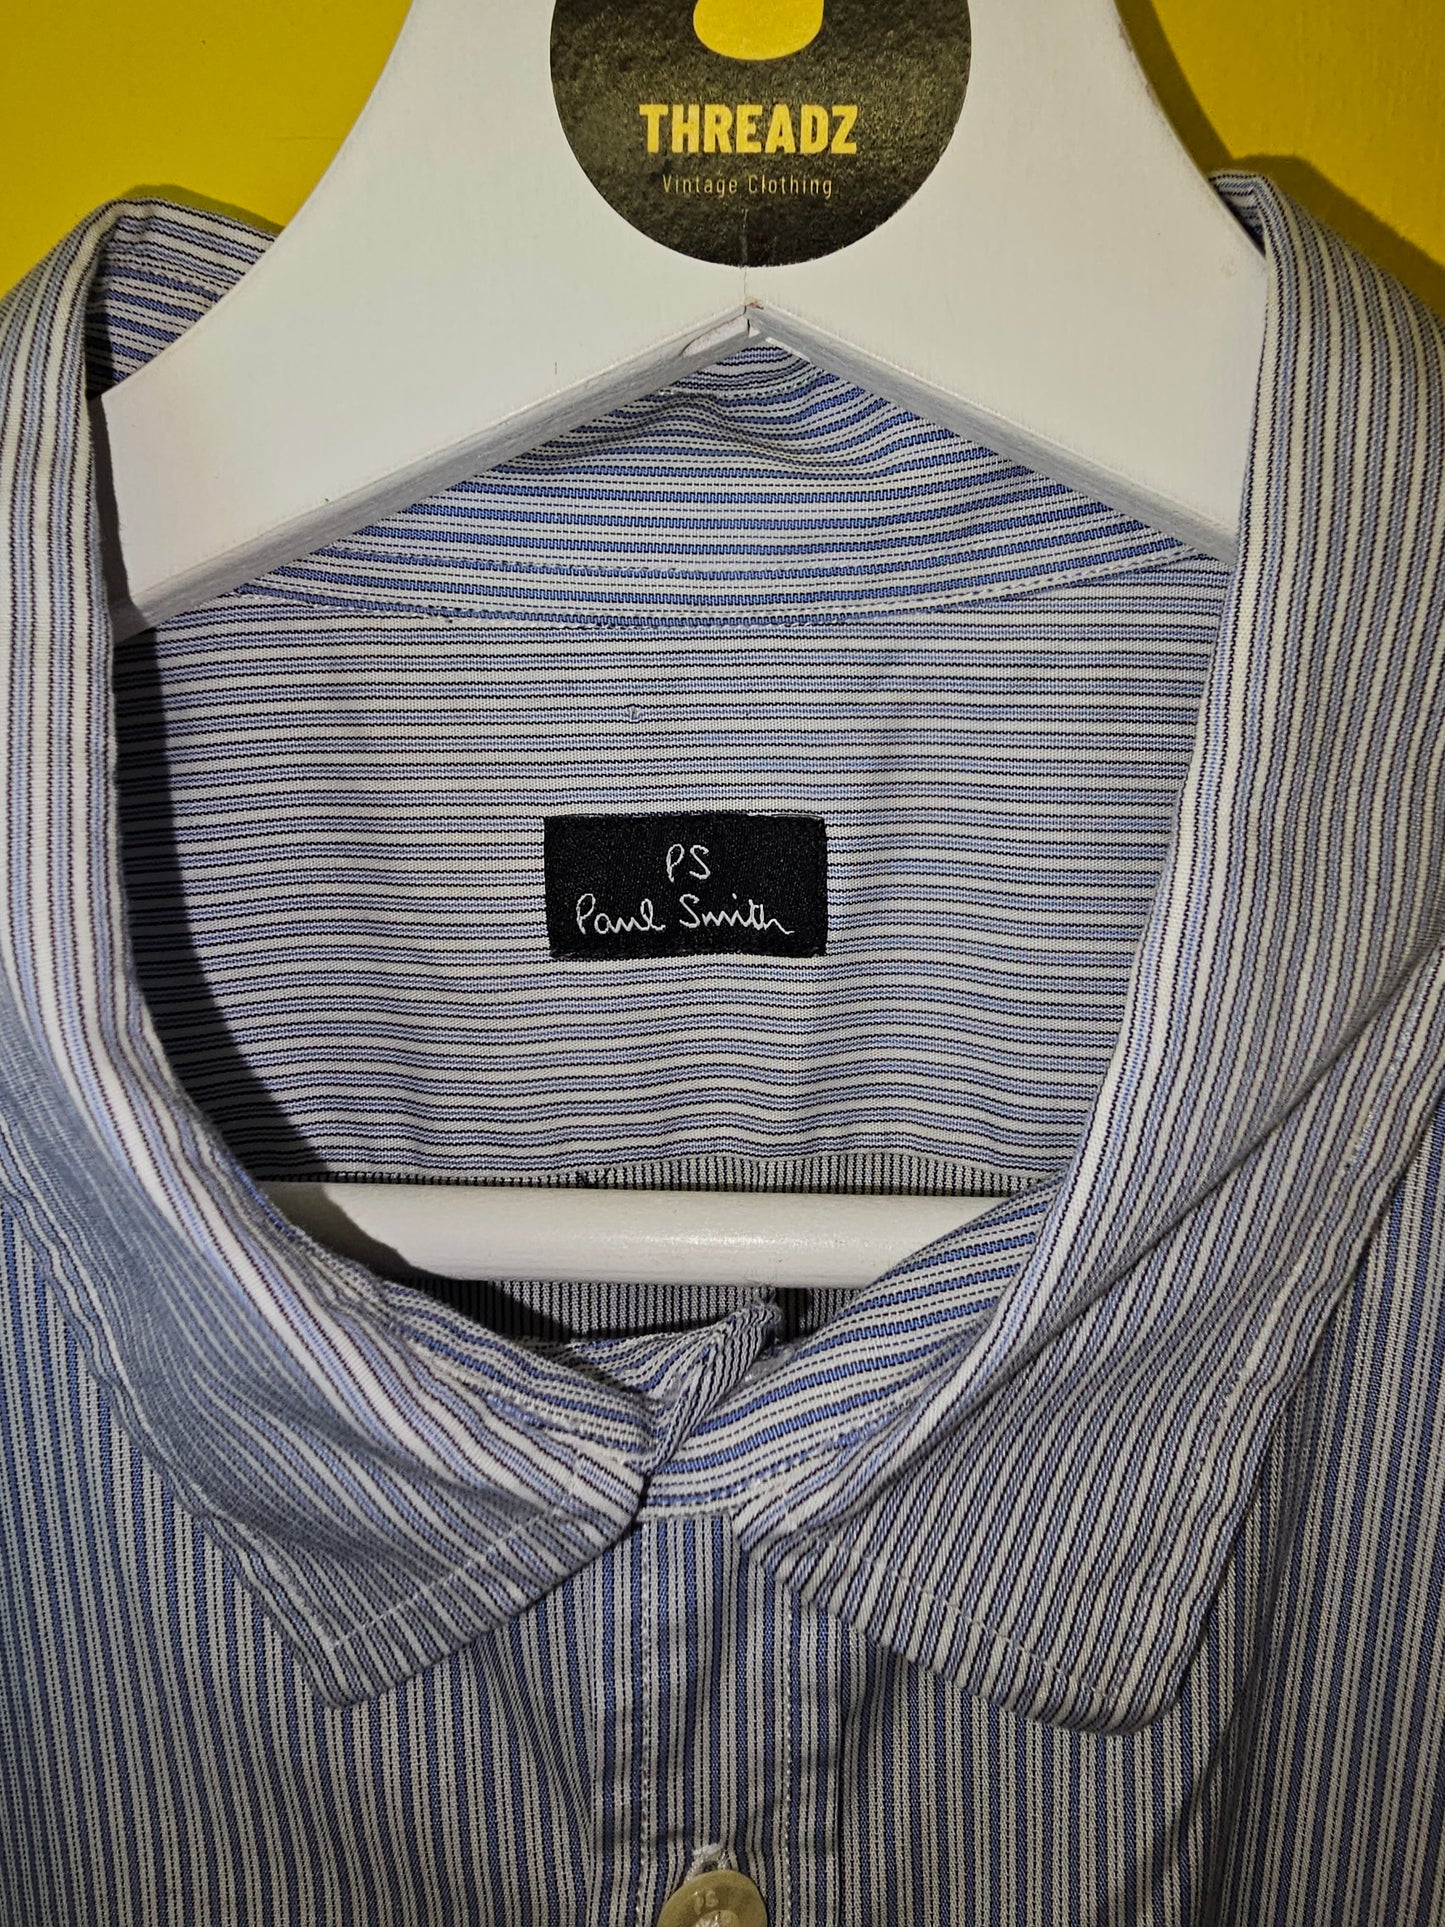 Paul Smith Striped Shirt (L)